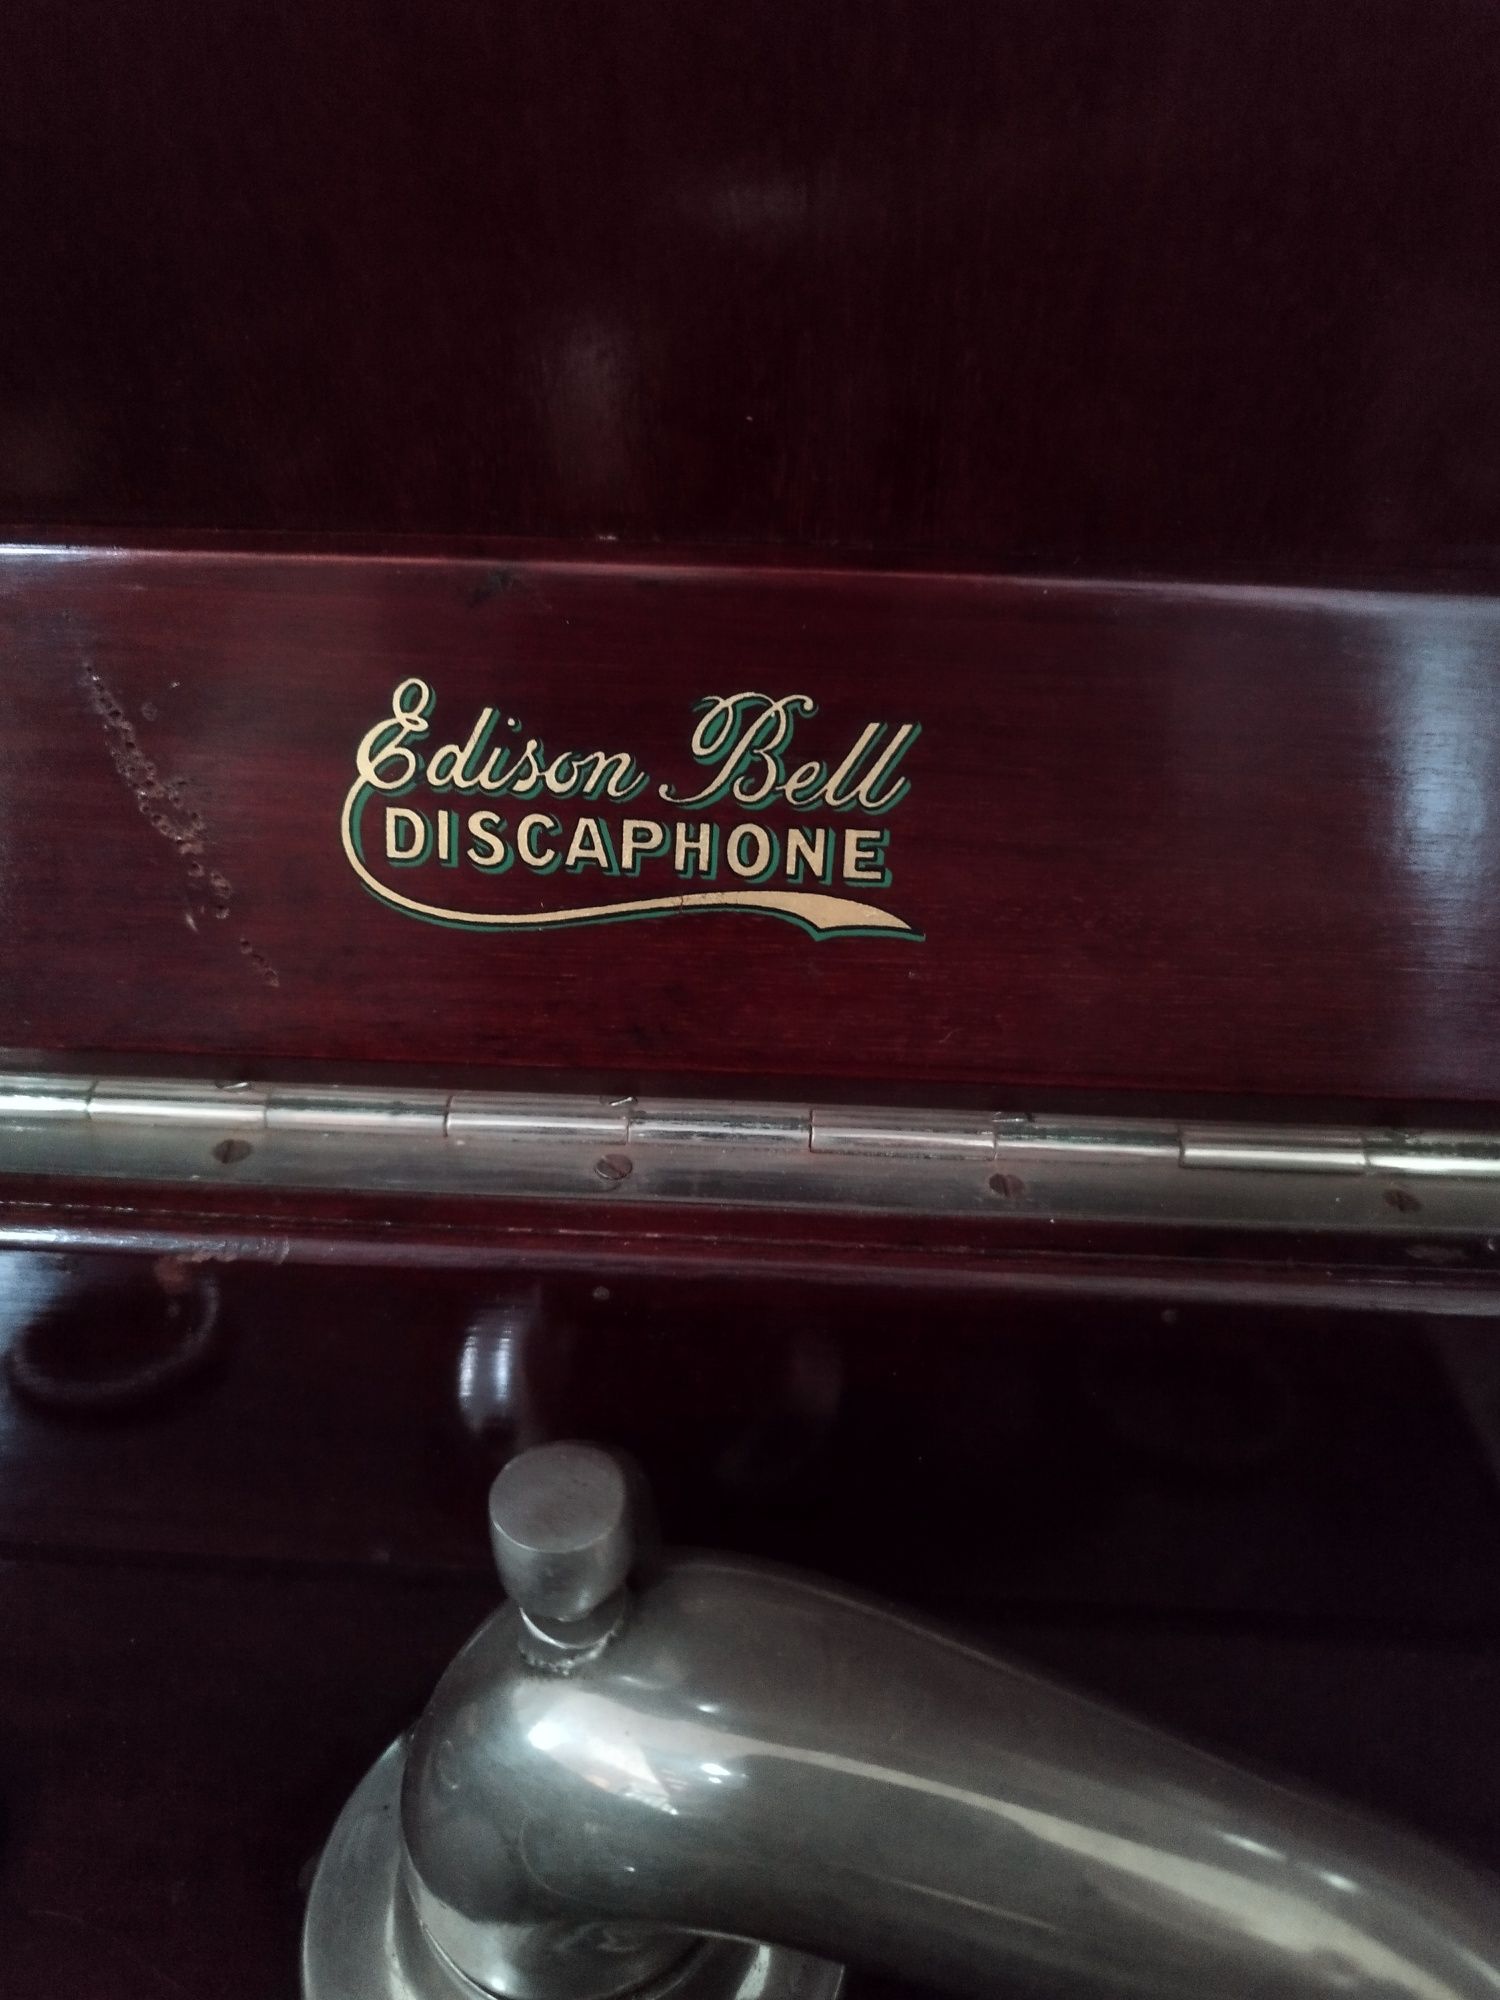 Edison Biell Discaphone